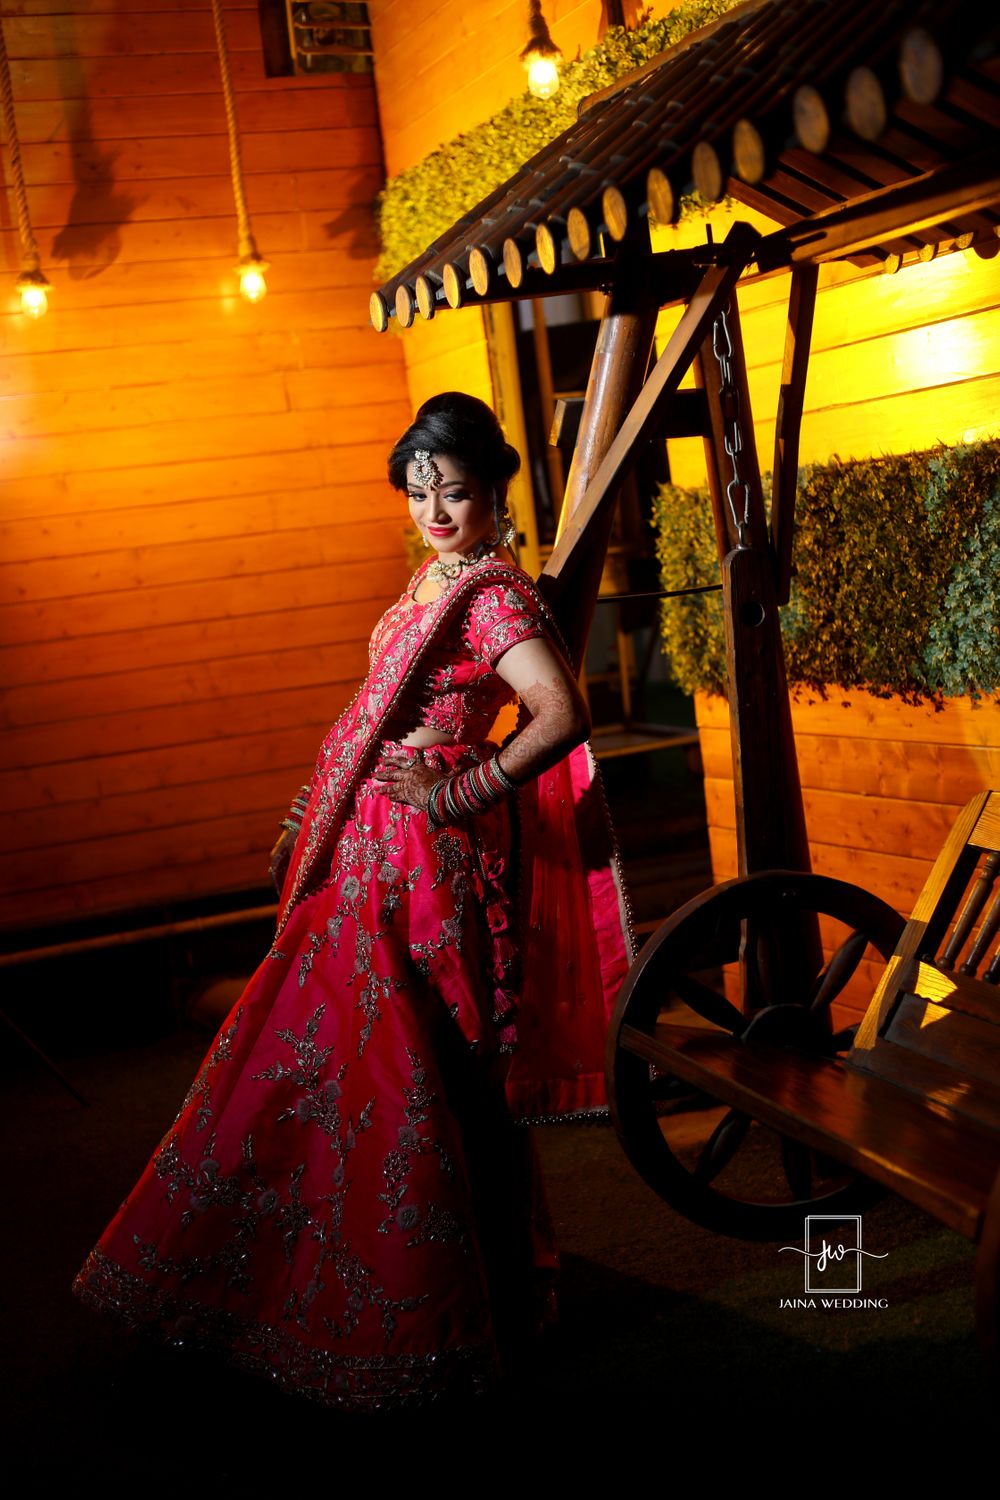 Photo From Aman ❤ Chhavi - By Jaina Wedding Photography